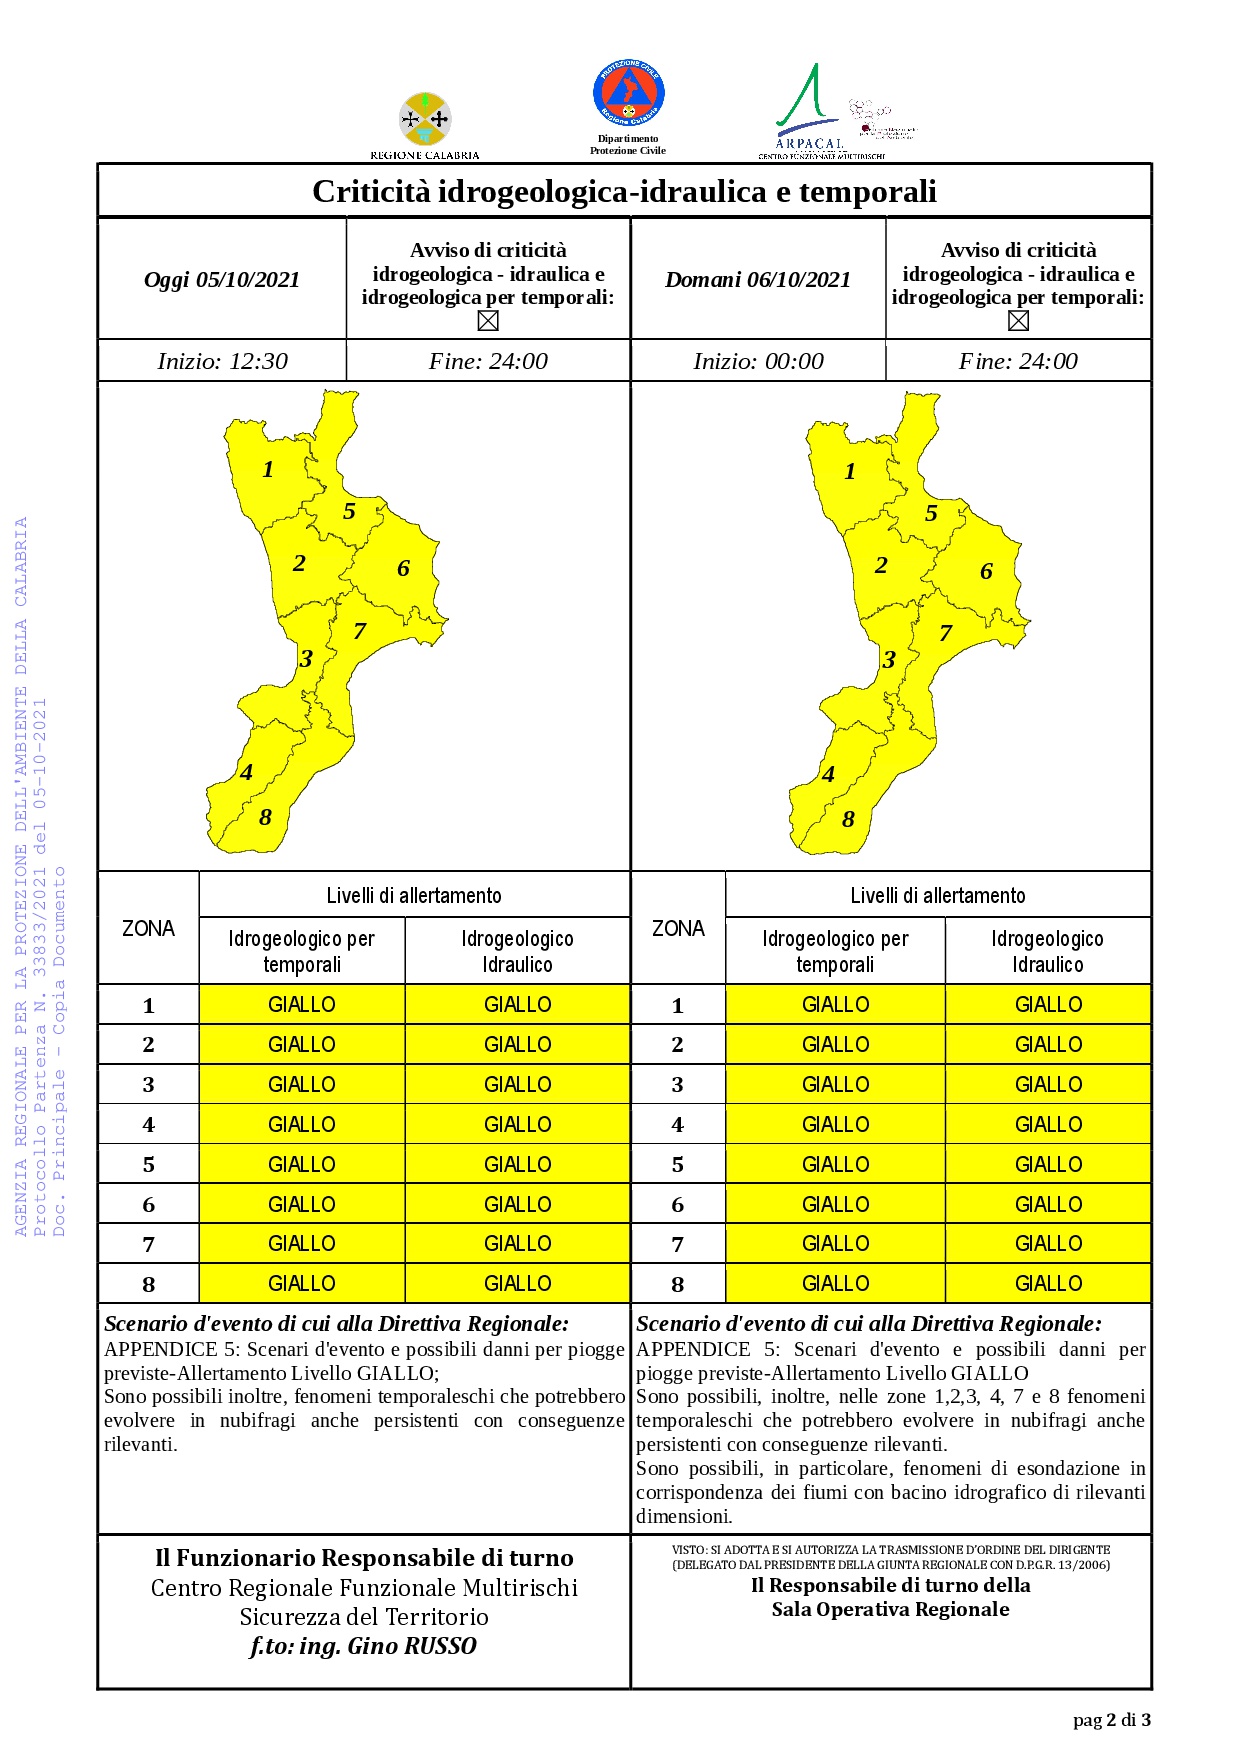 Criticità idrogeologica-idraulica e temporali in Calabria 05-10-2021